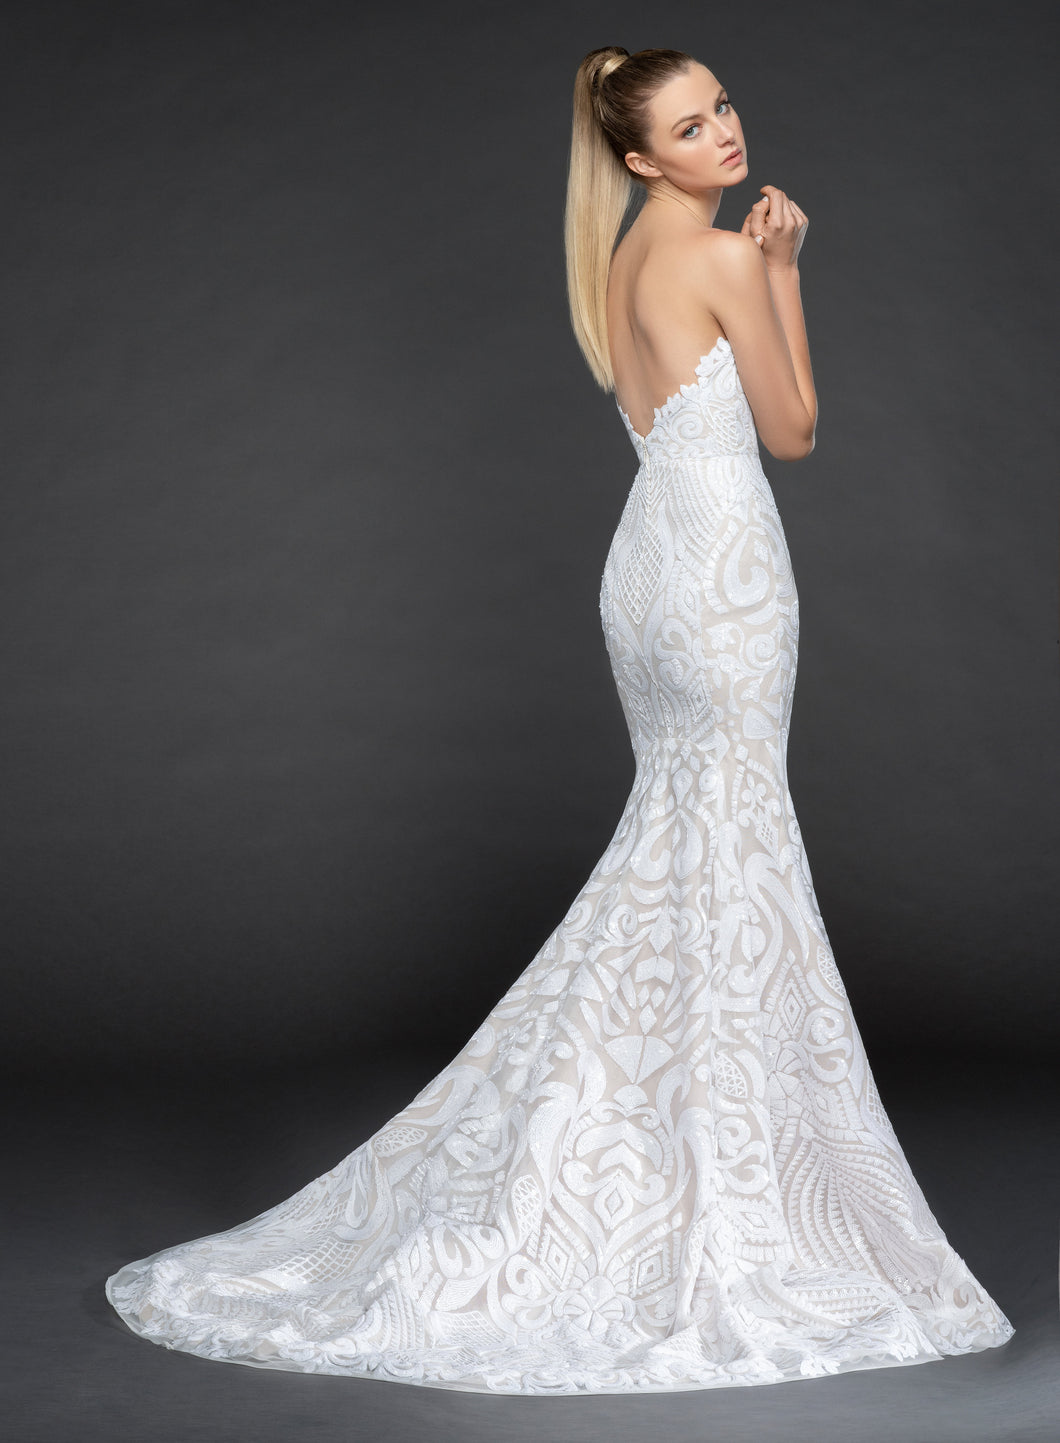 Hayley Paige 'Safyr' size 8 new wedding dress back view on model